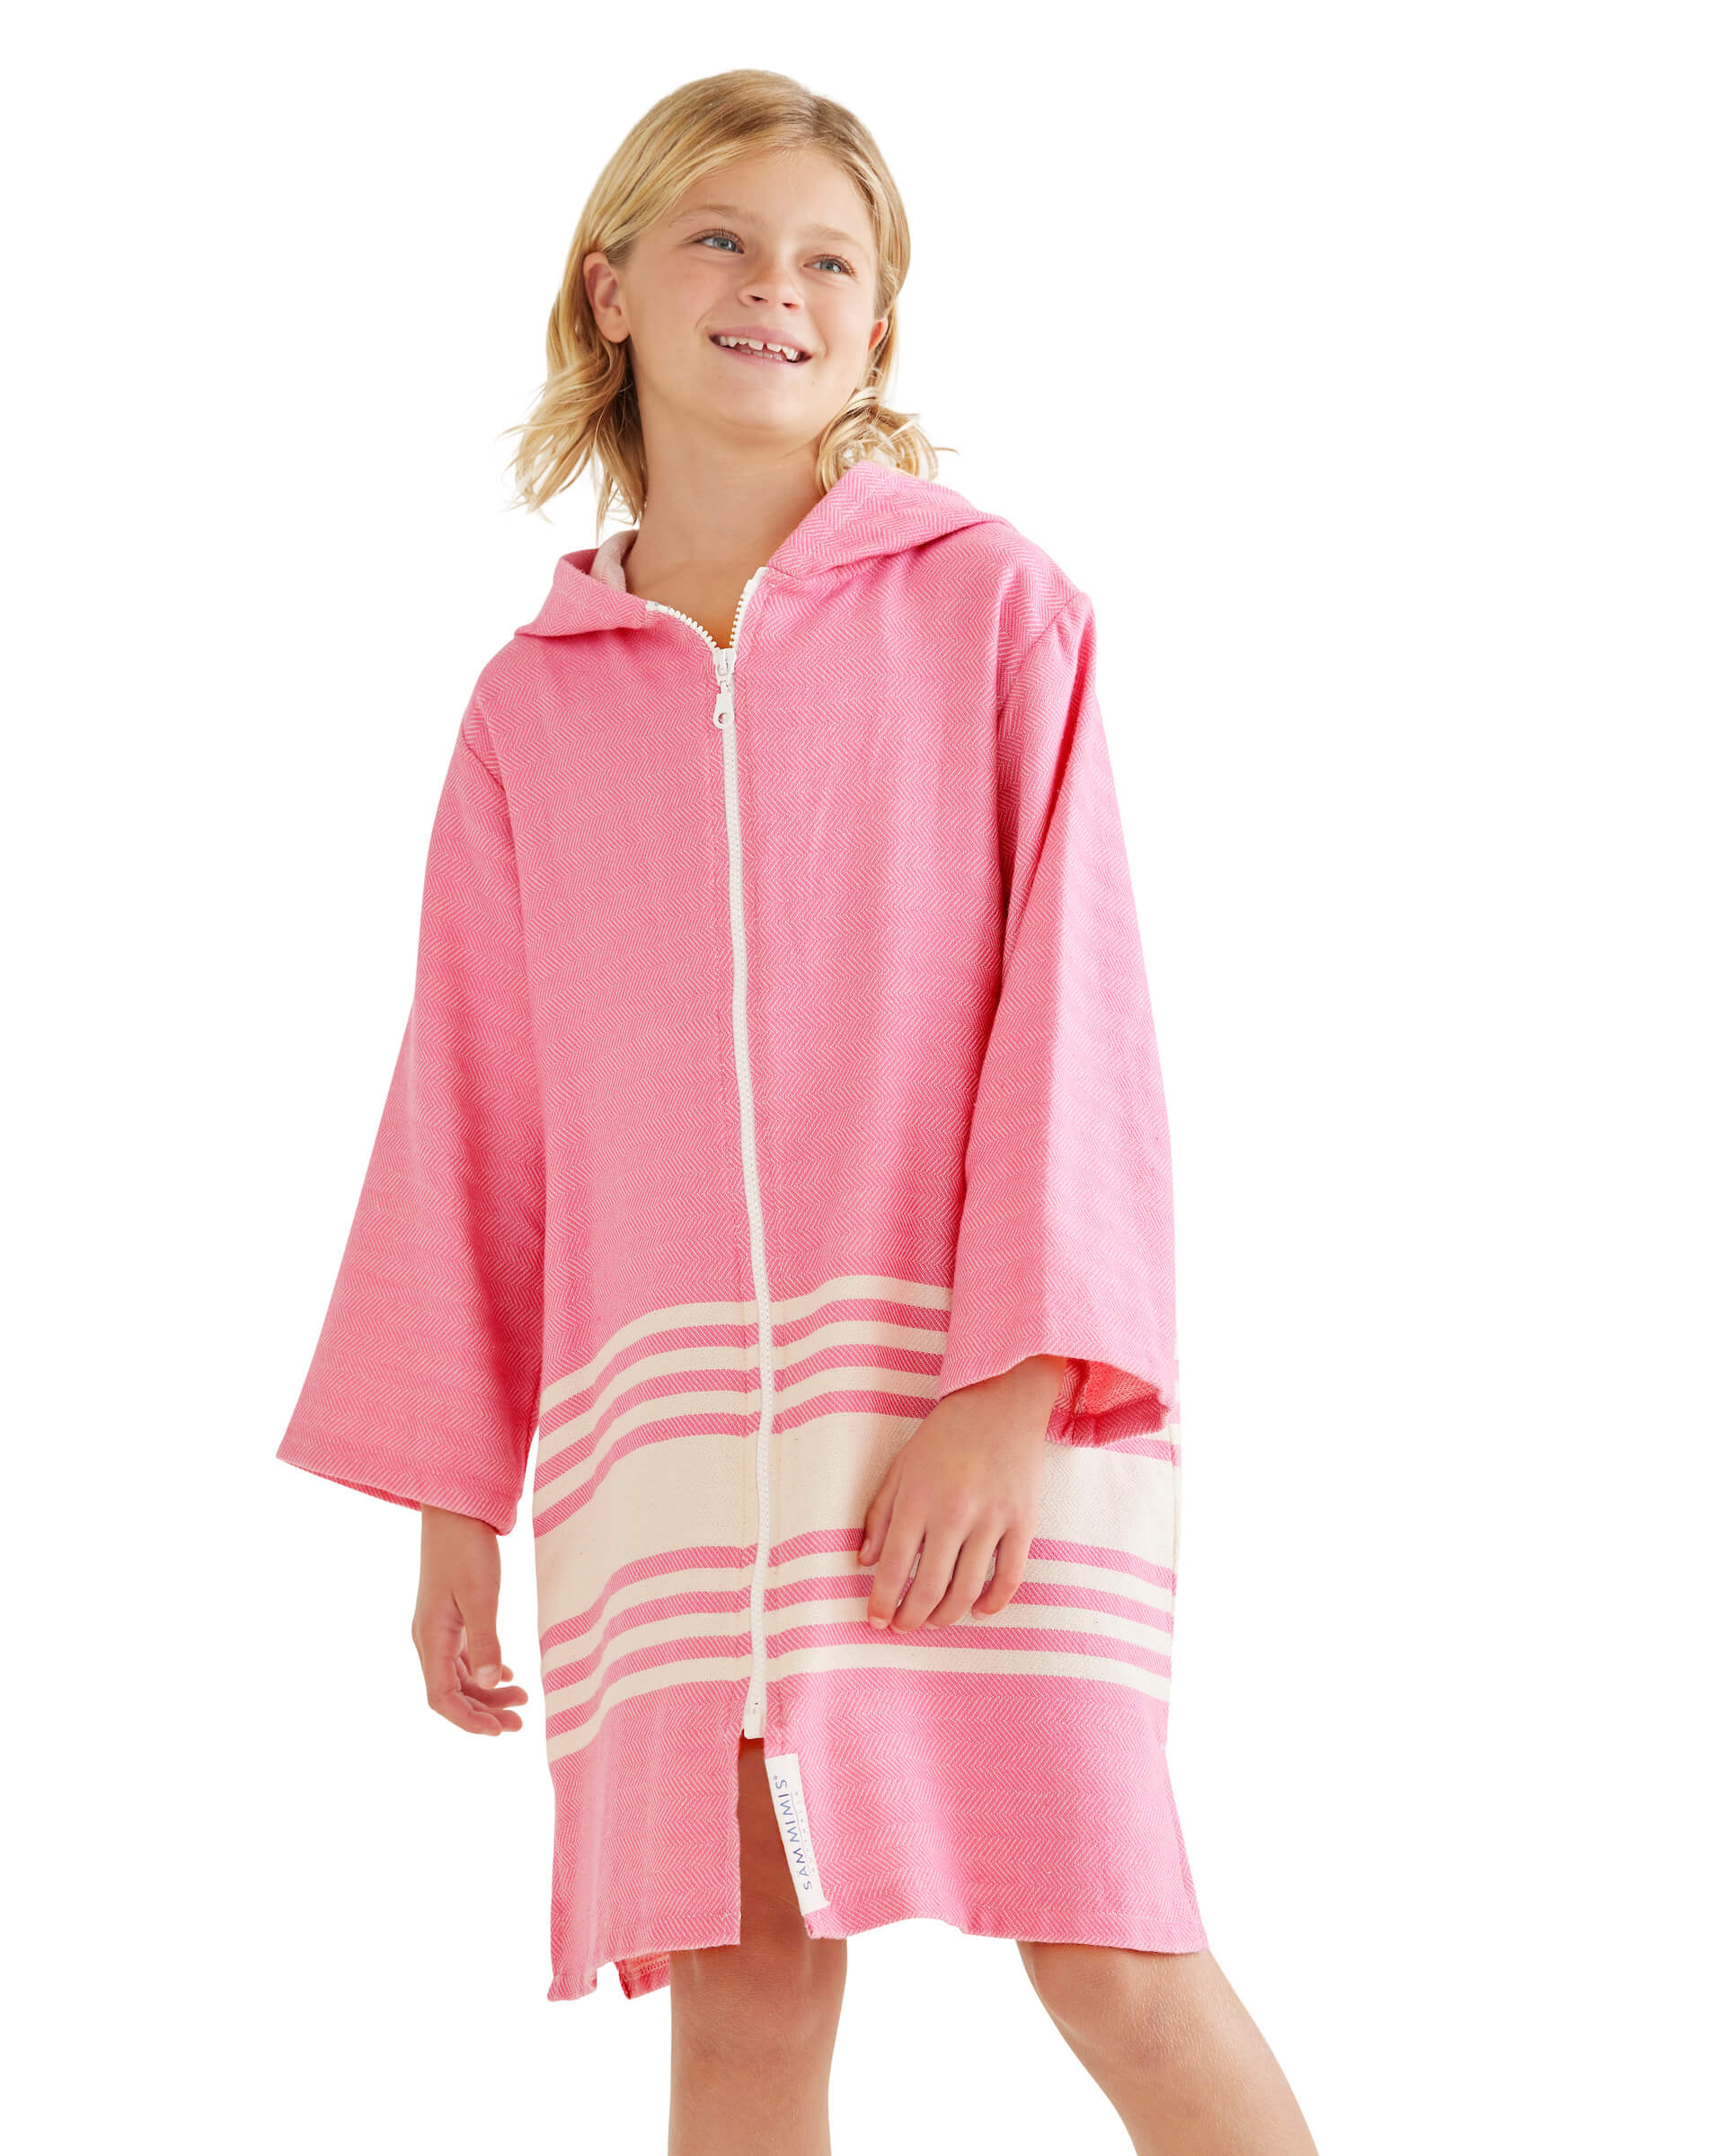 TASSOS Kids Hooded Towel: Hot Pink/White